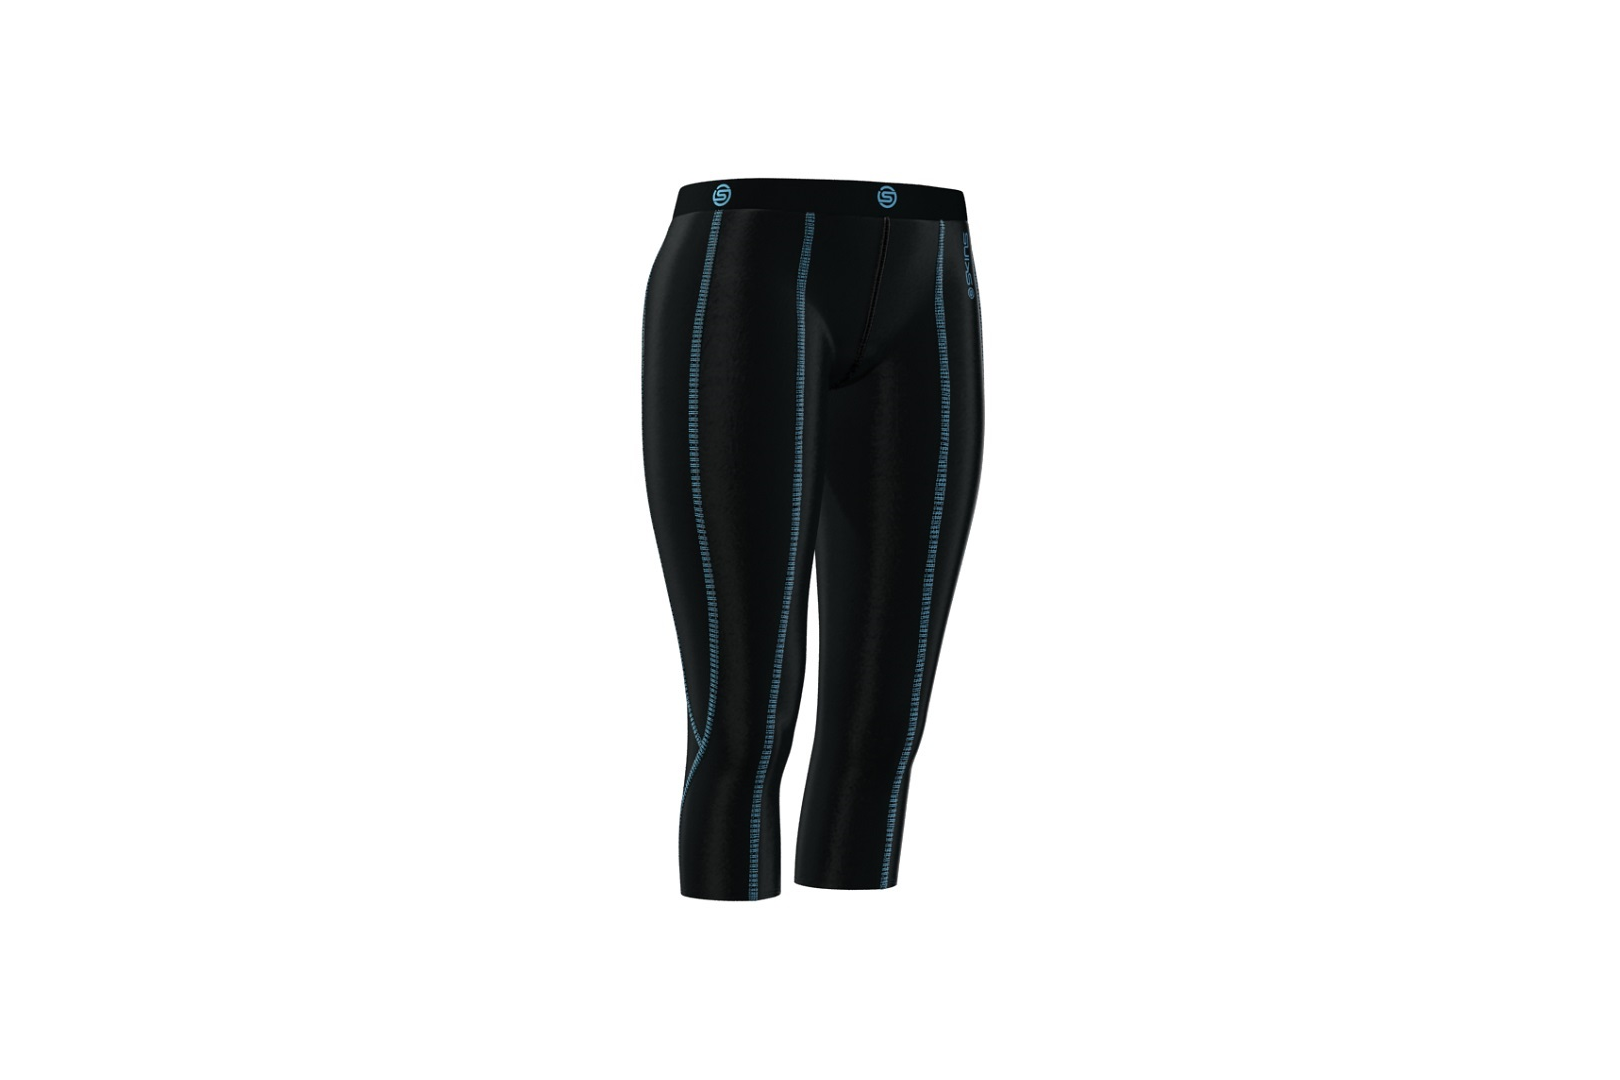 NEXTAGE Slogan Black Vibes Dri Fit Tracksuit - Sportswear - Gymwear Track  suit